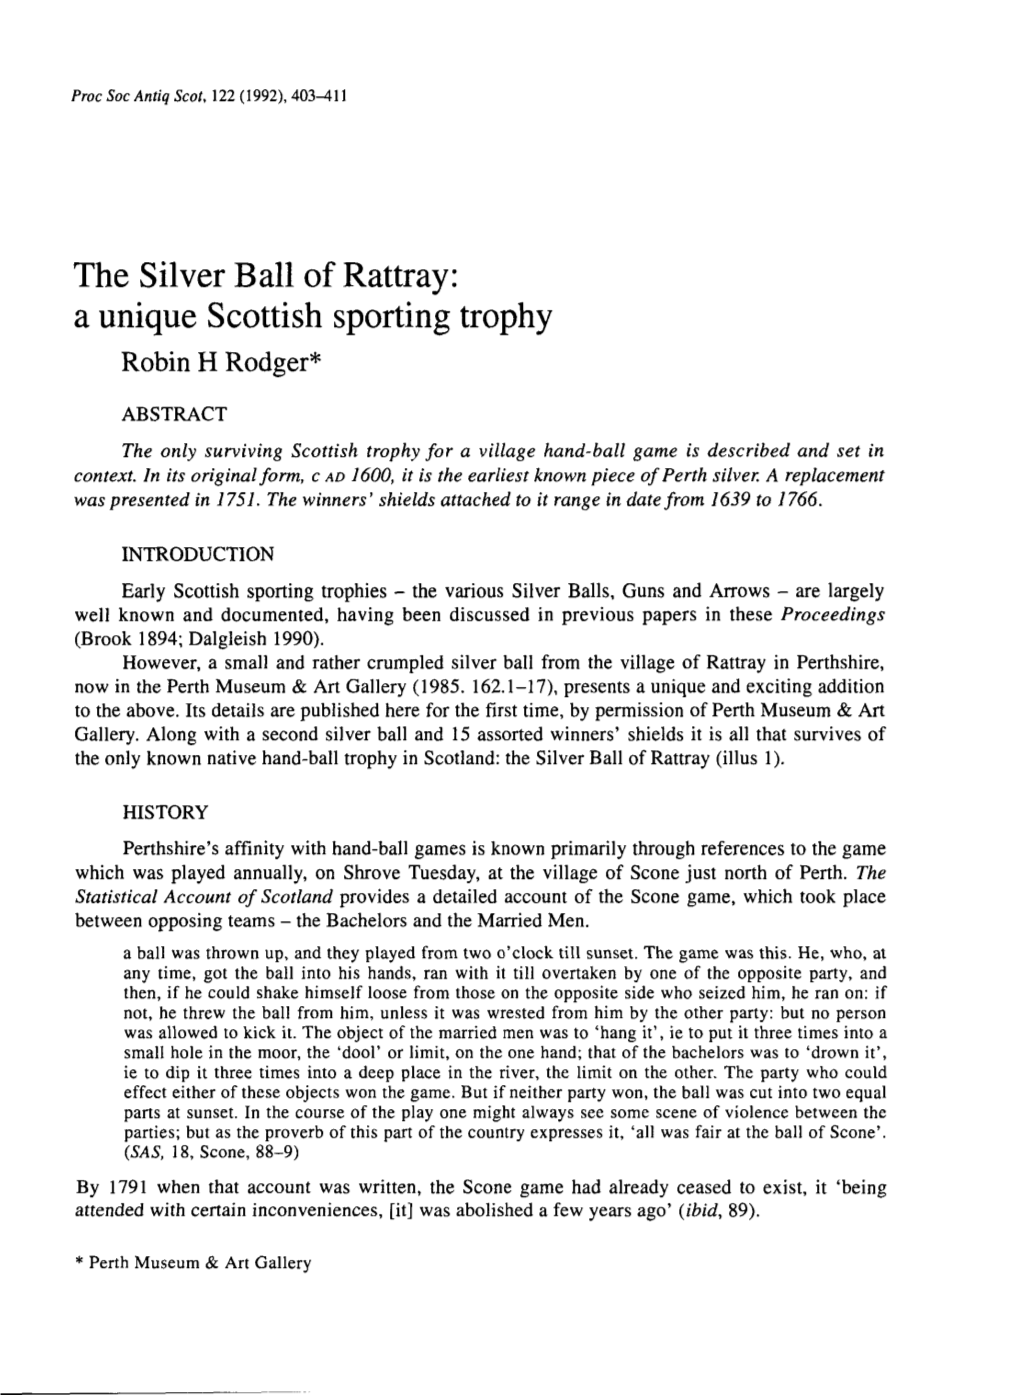 The Silver Ball of Rattray: Uniqua E Scottish Sporting Trophy Robin H Rodger*